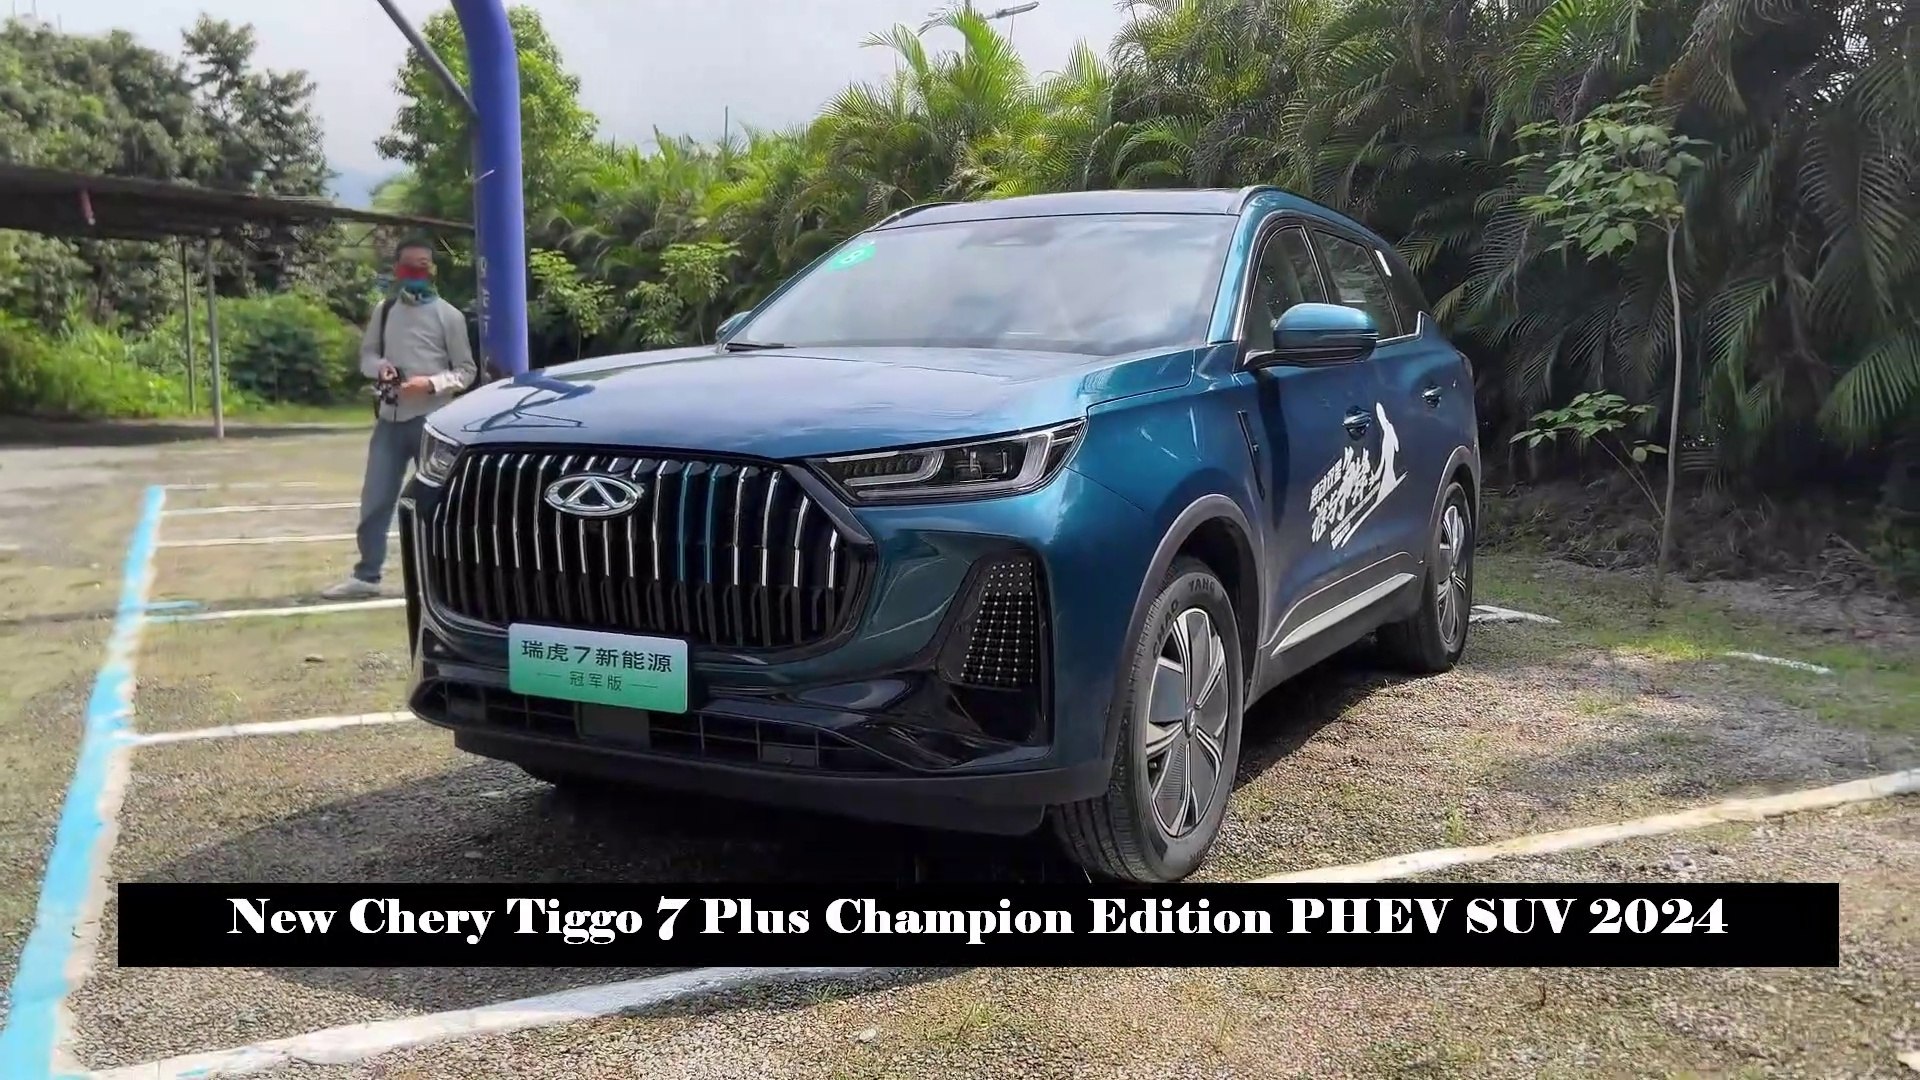 New Chery Tiggo 7 Plus Champion Edition PHEV SUV 2024 - video